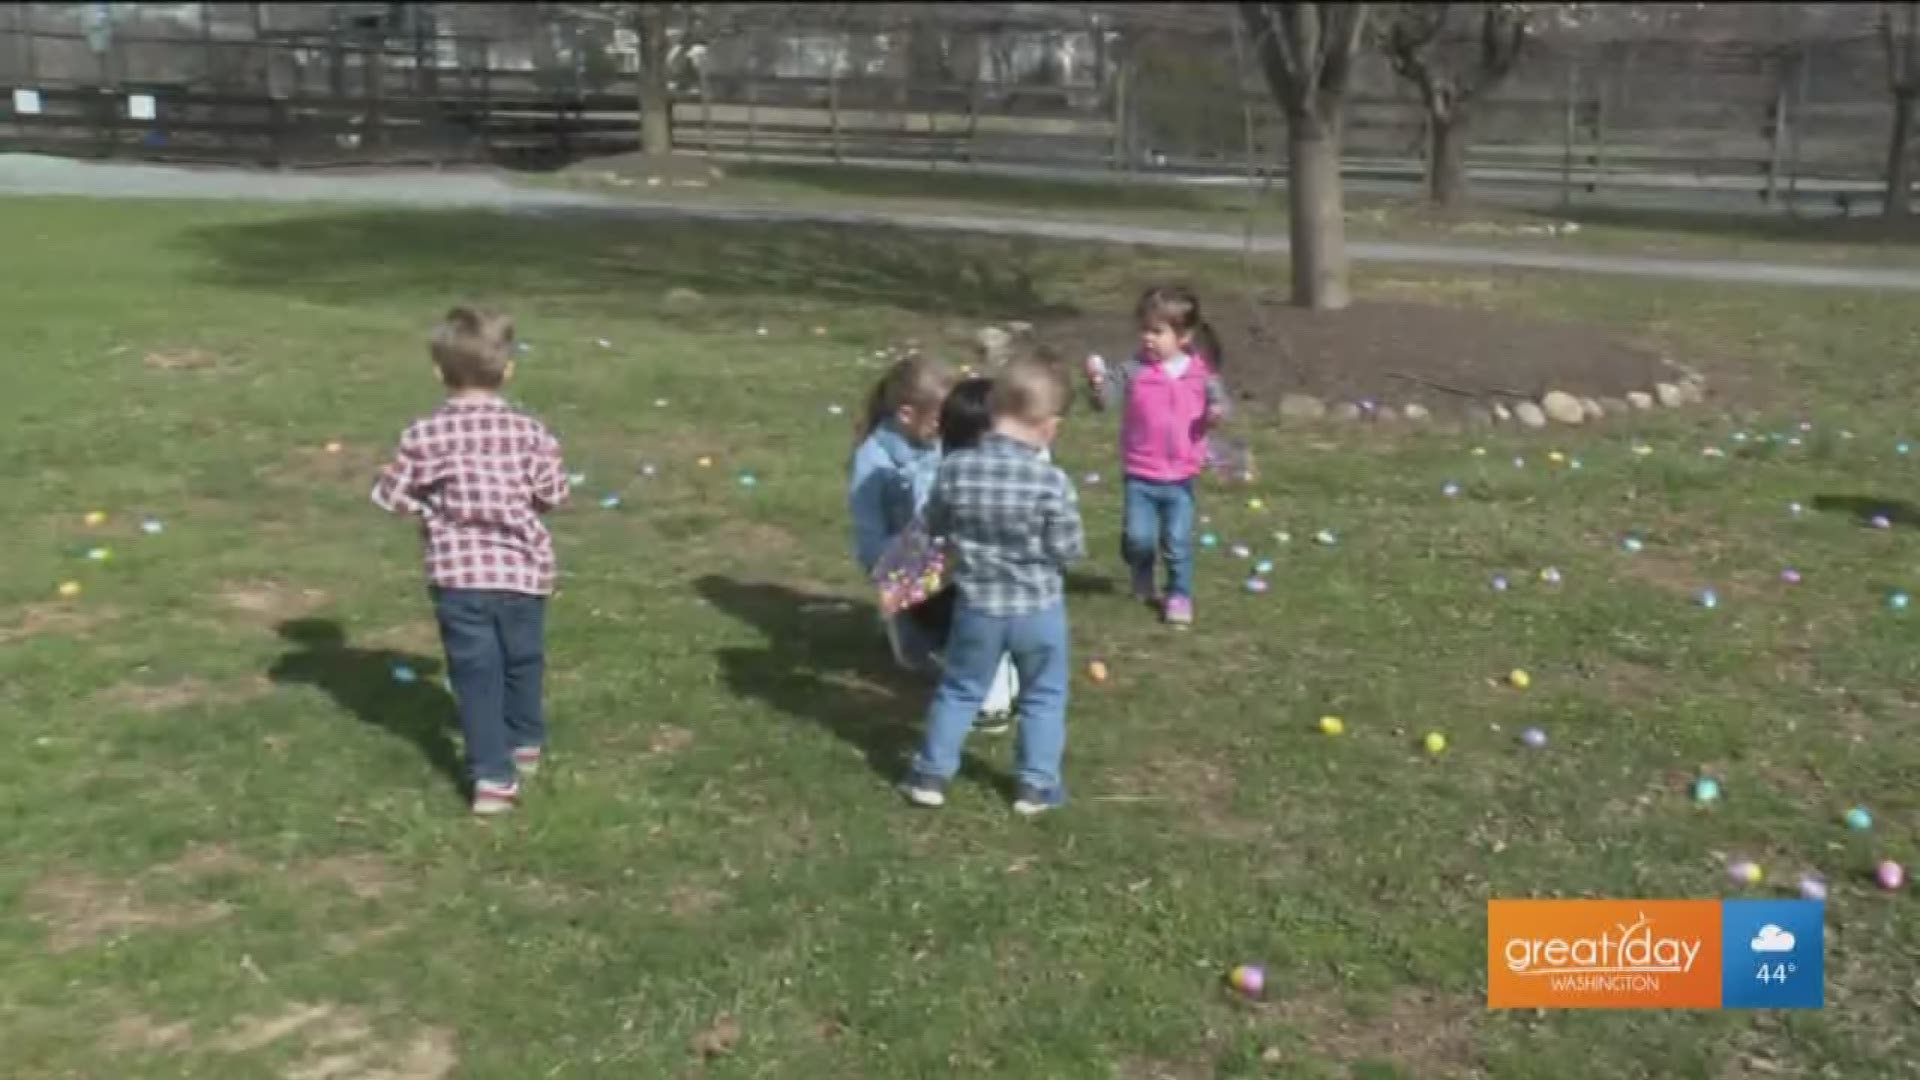 Easter egg playground prizes won